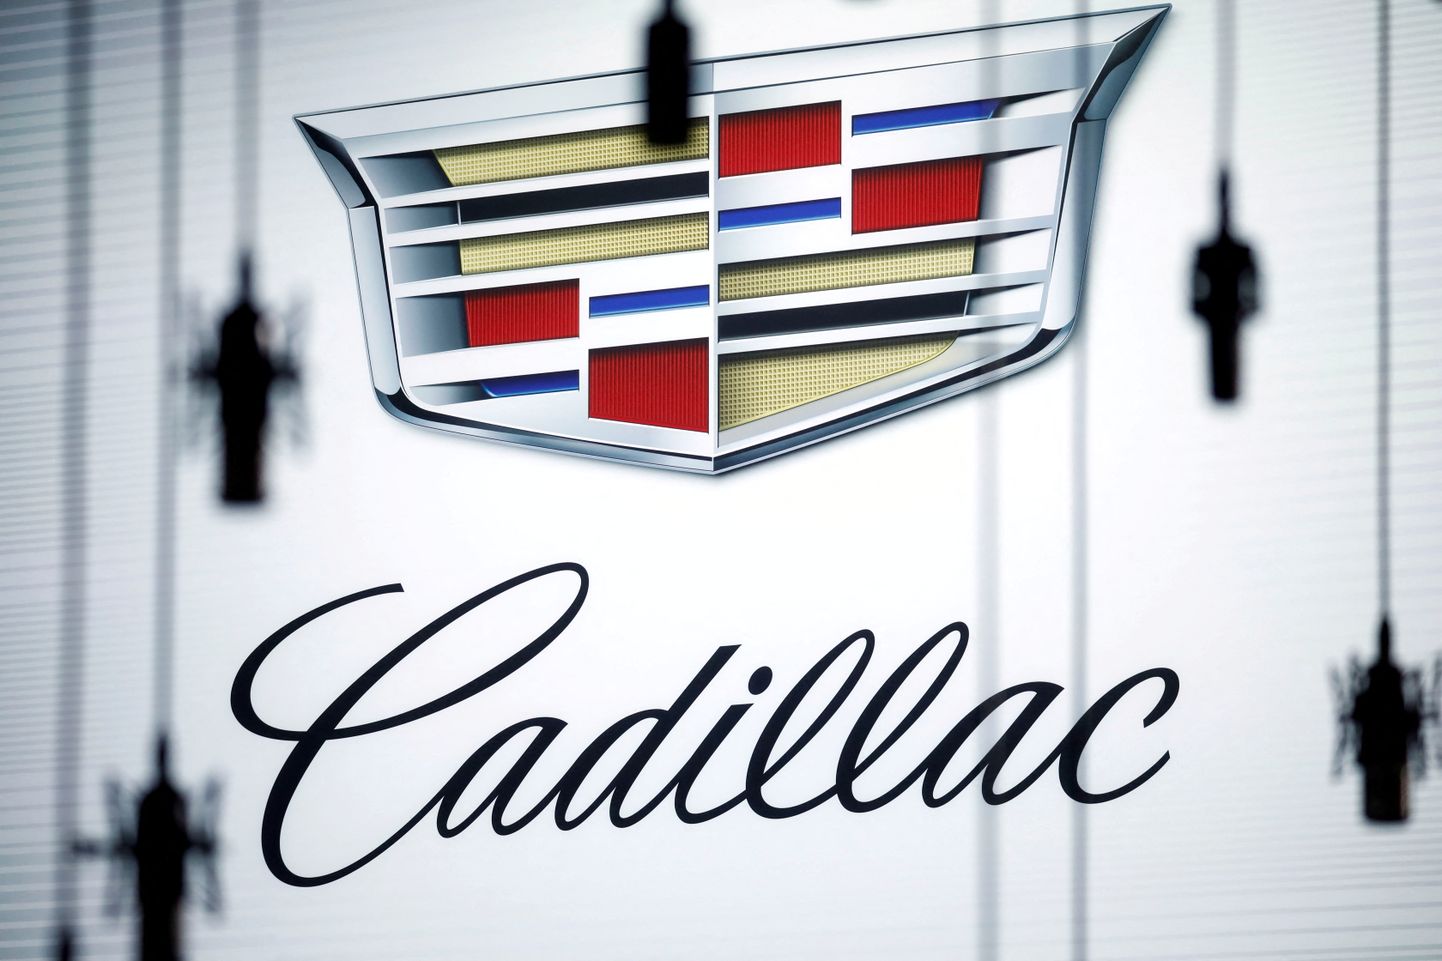 Cadillac.